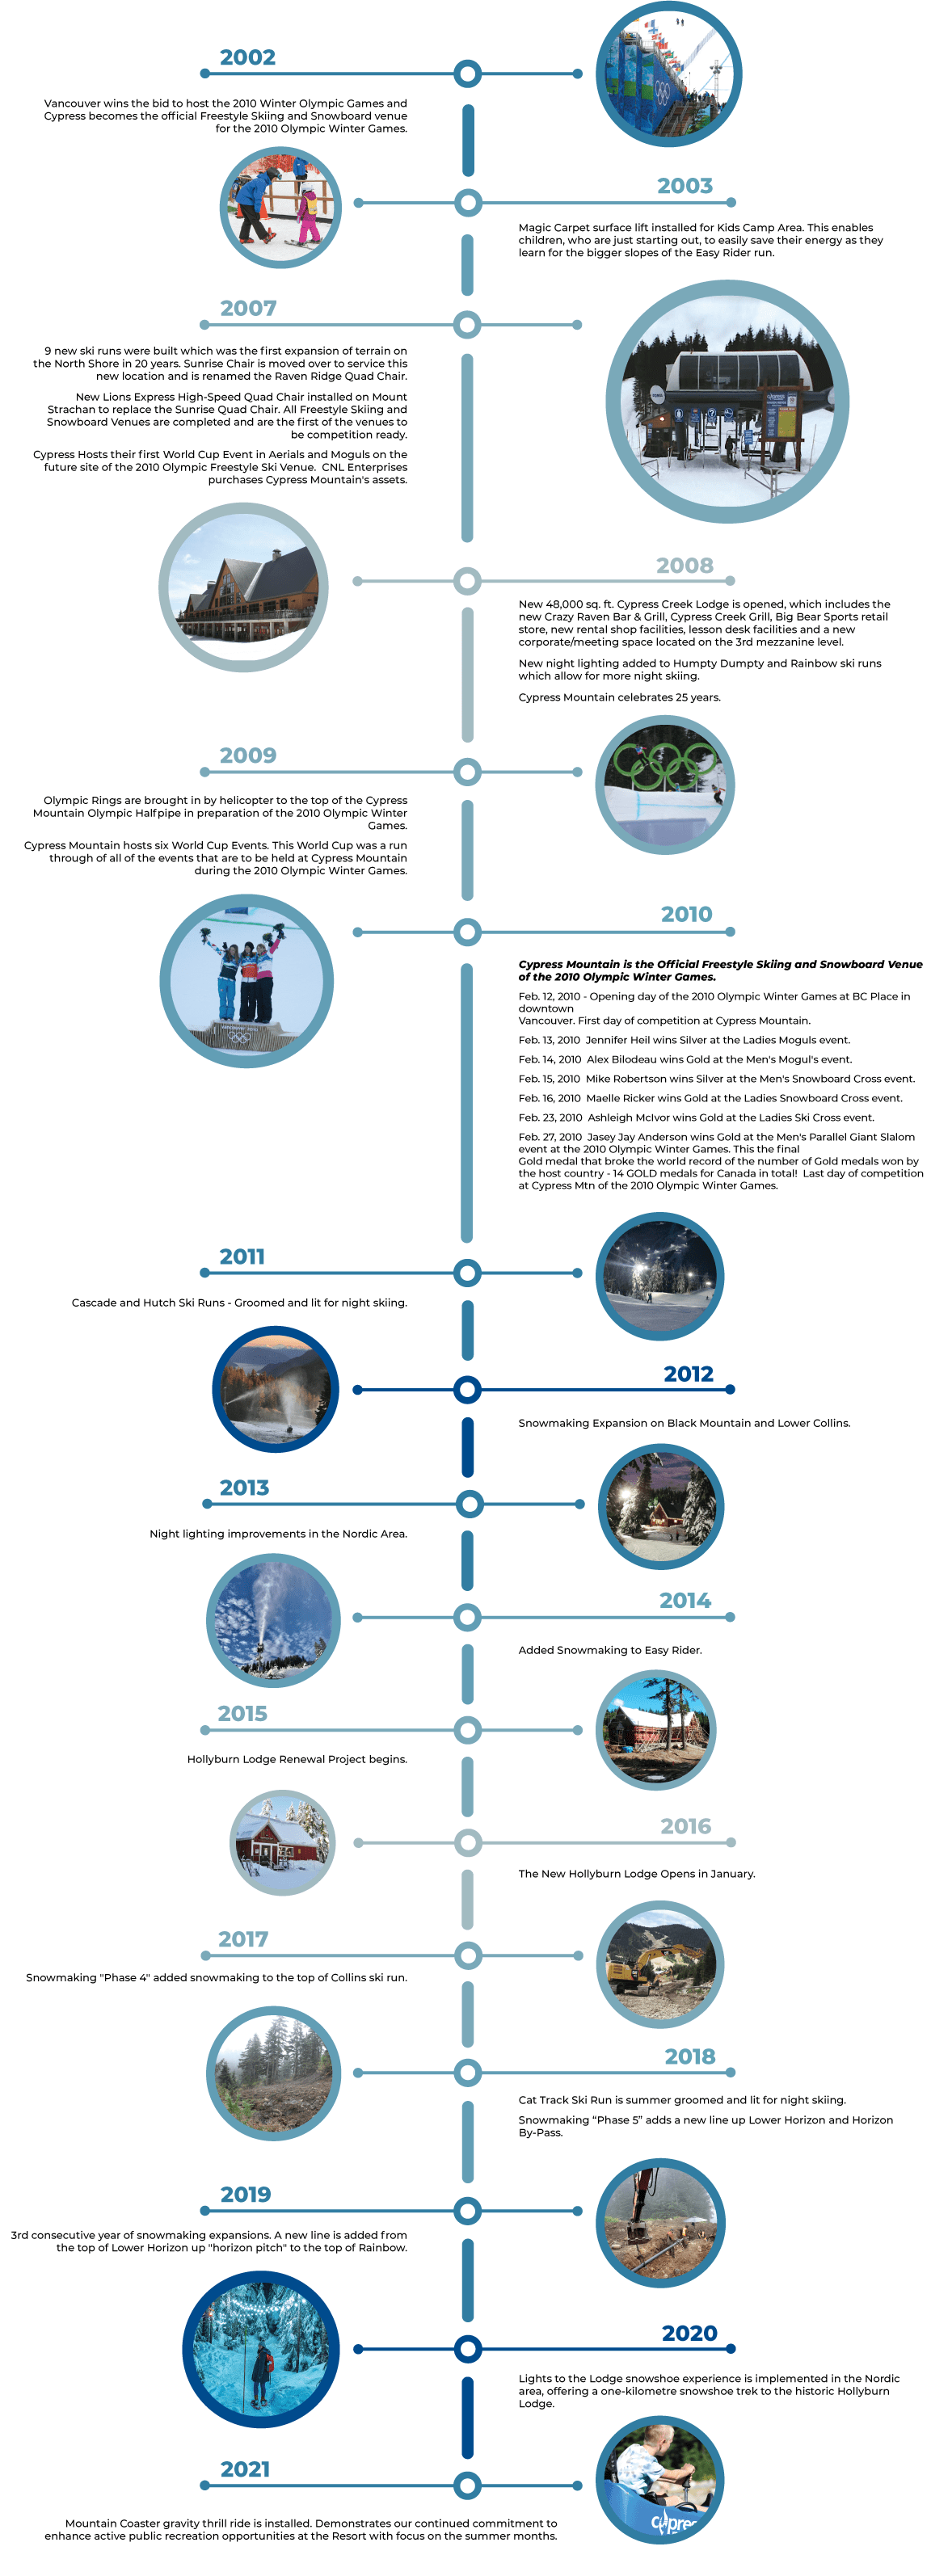 cypress mountain timeline